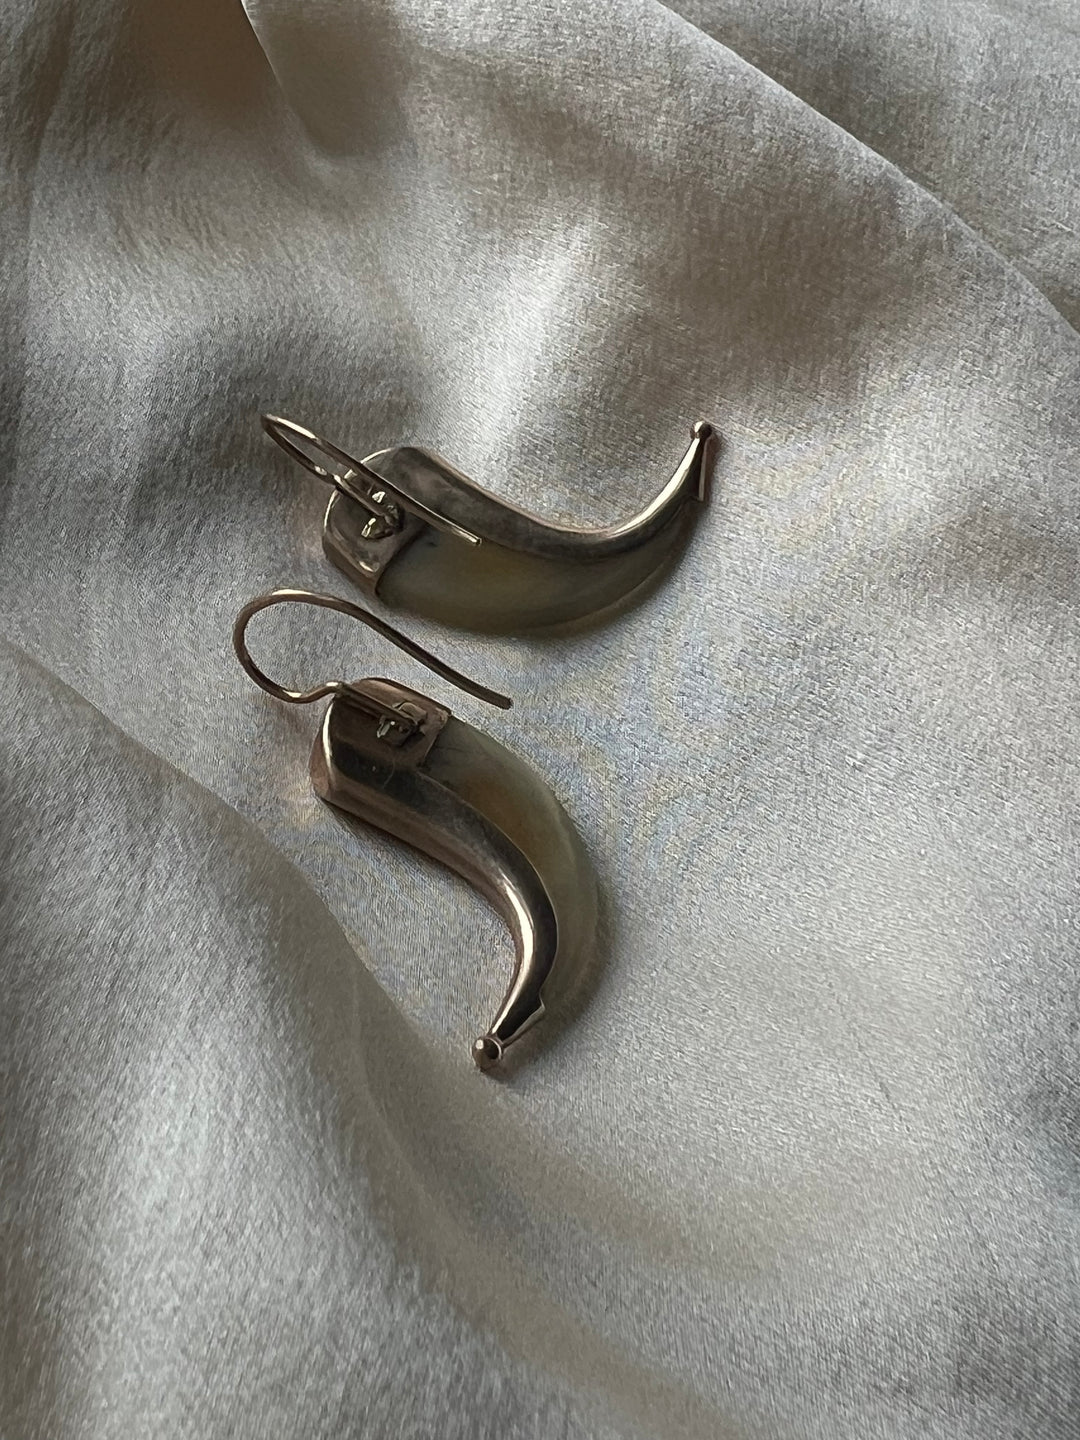 14ct Gold Claw Earrings Circa 1890